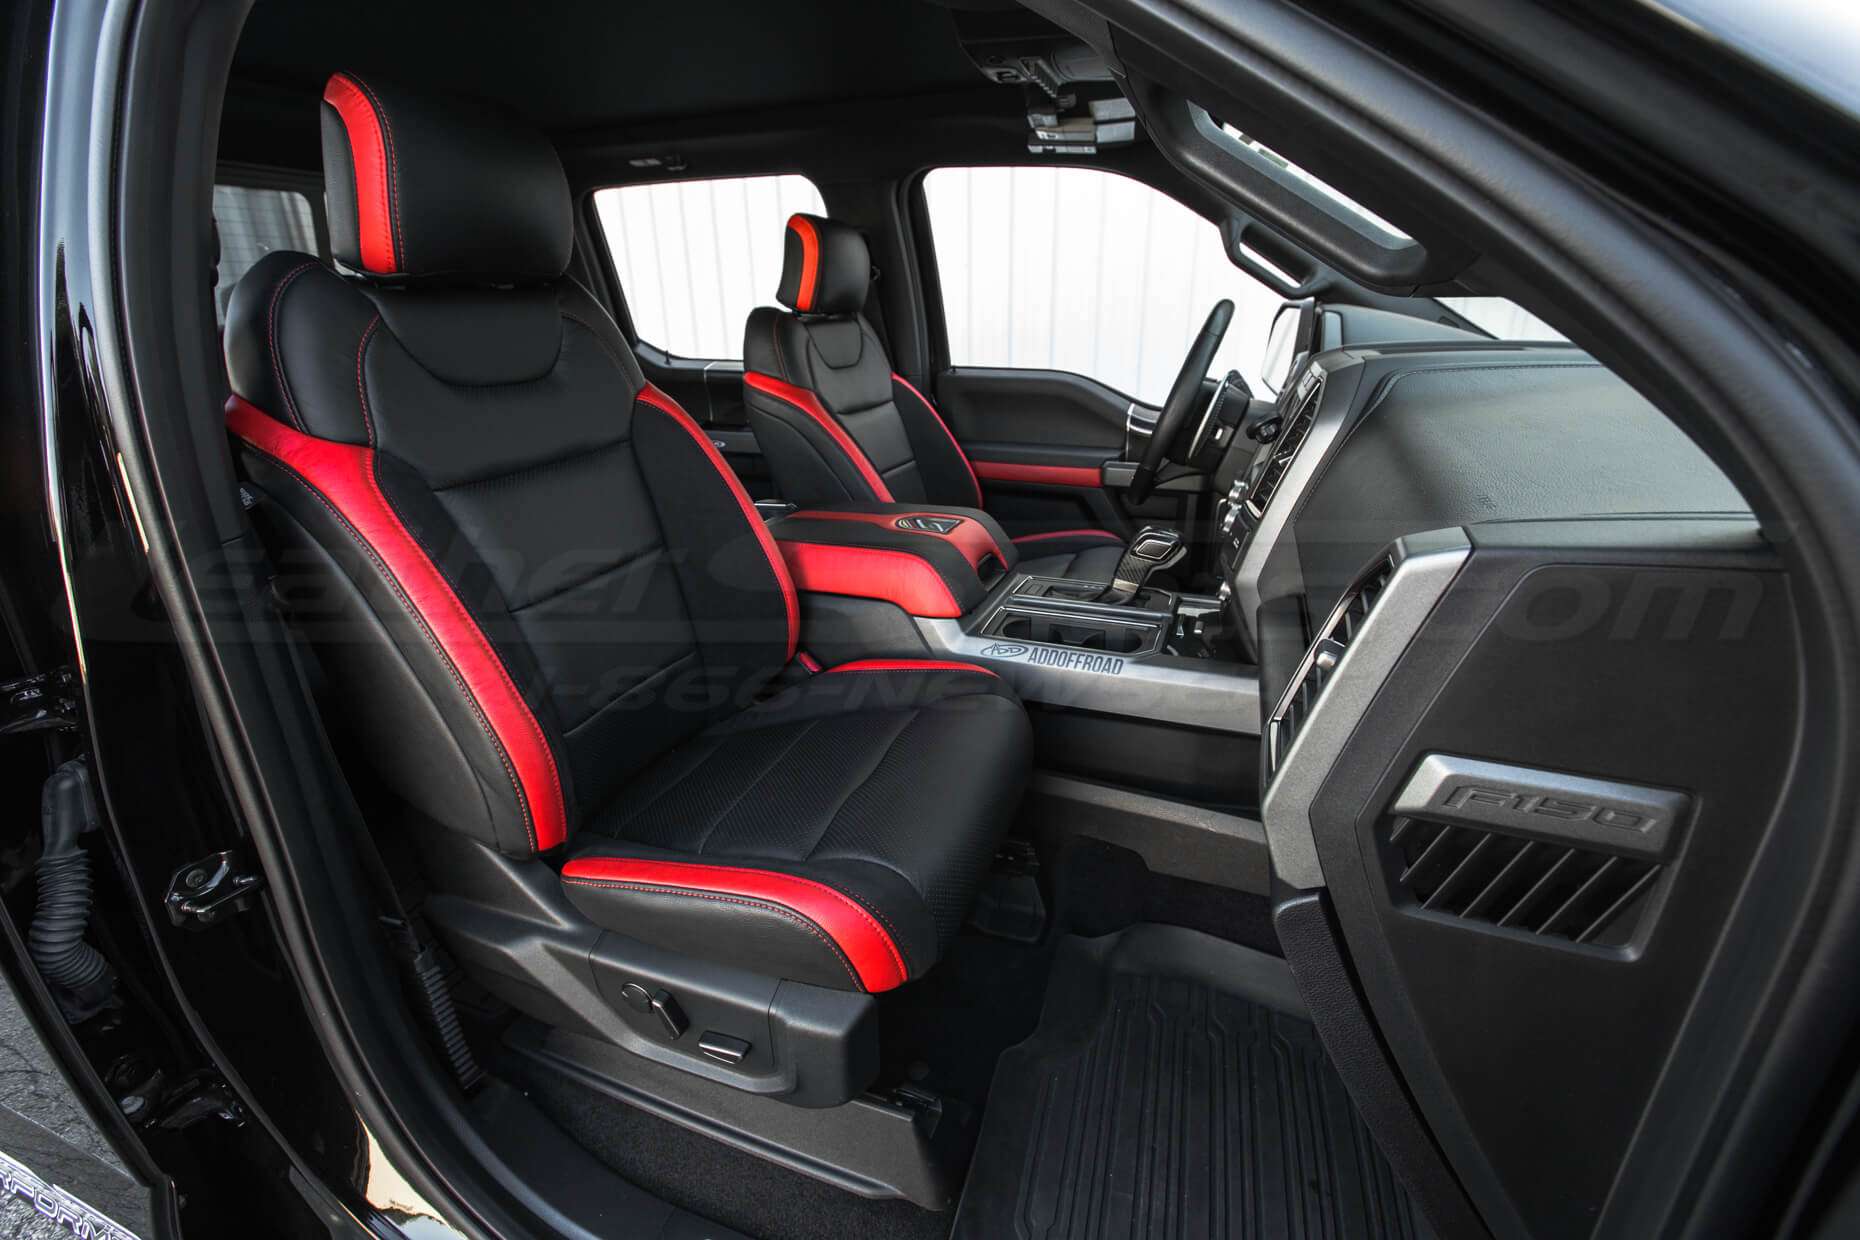 Ford Raptor installed upholstery kit - Black & Bright Red - Front passenger seat